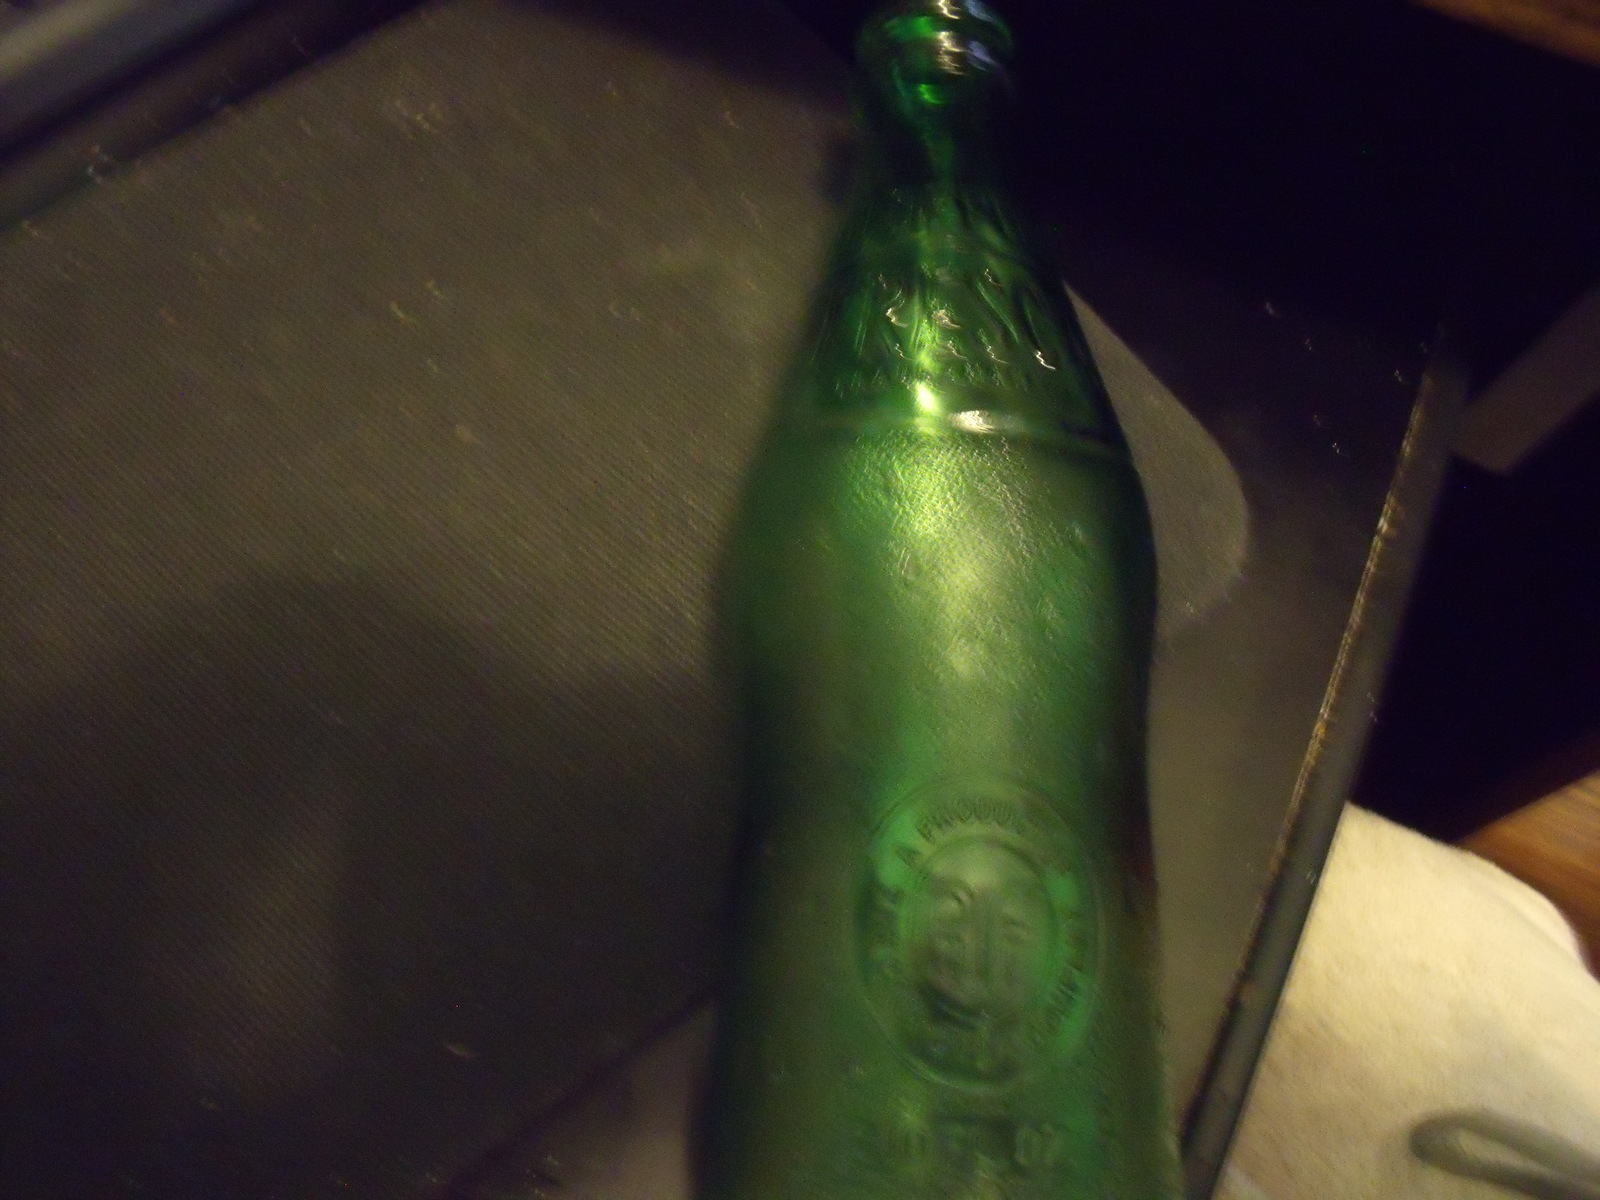 Details about   Vintage Fresca Soda Pop Bottle 10 oz 